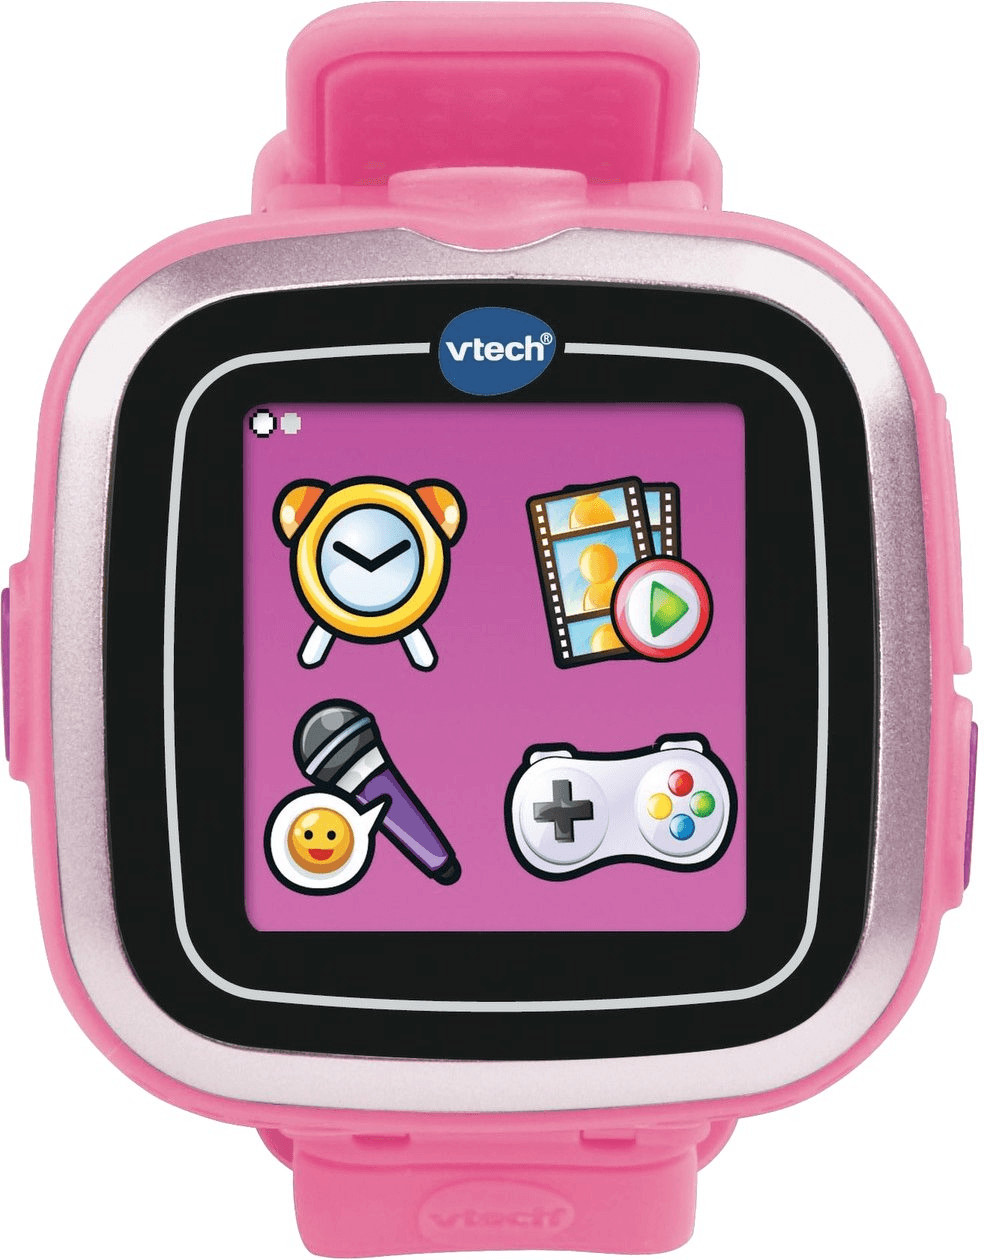 Vtech Kidizoom Smart Watch Pink